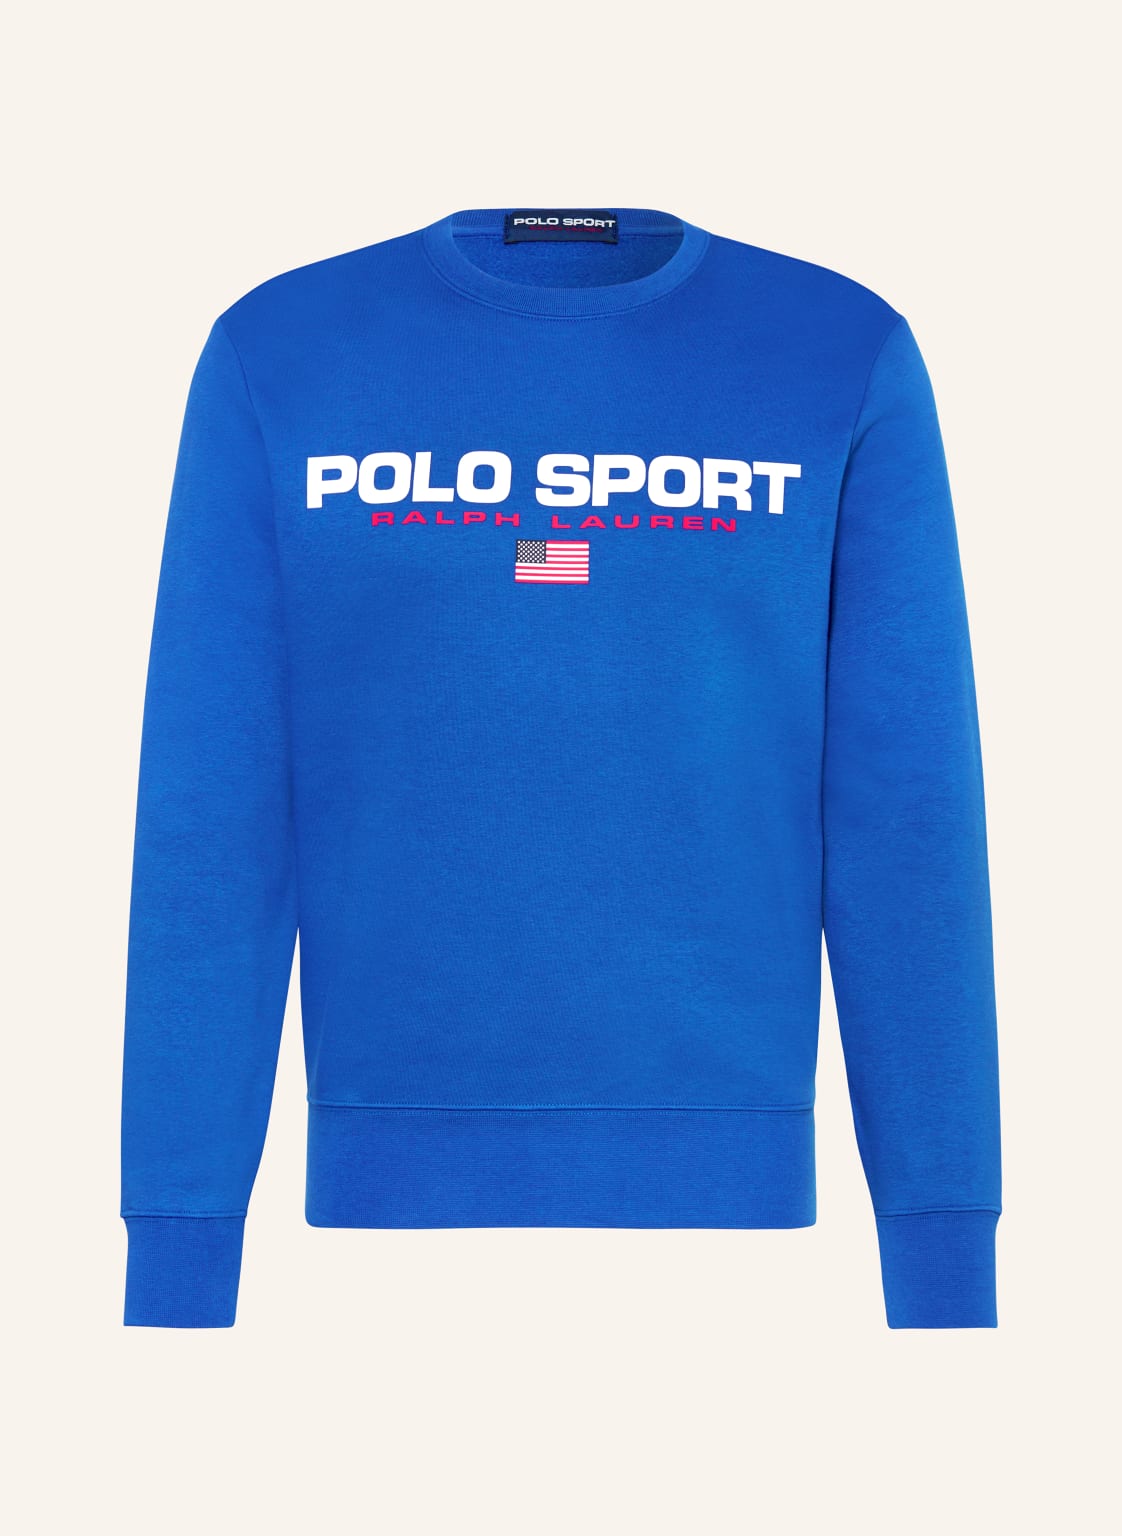 Polo Sport Sweatshirt blau von POLO SPORT